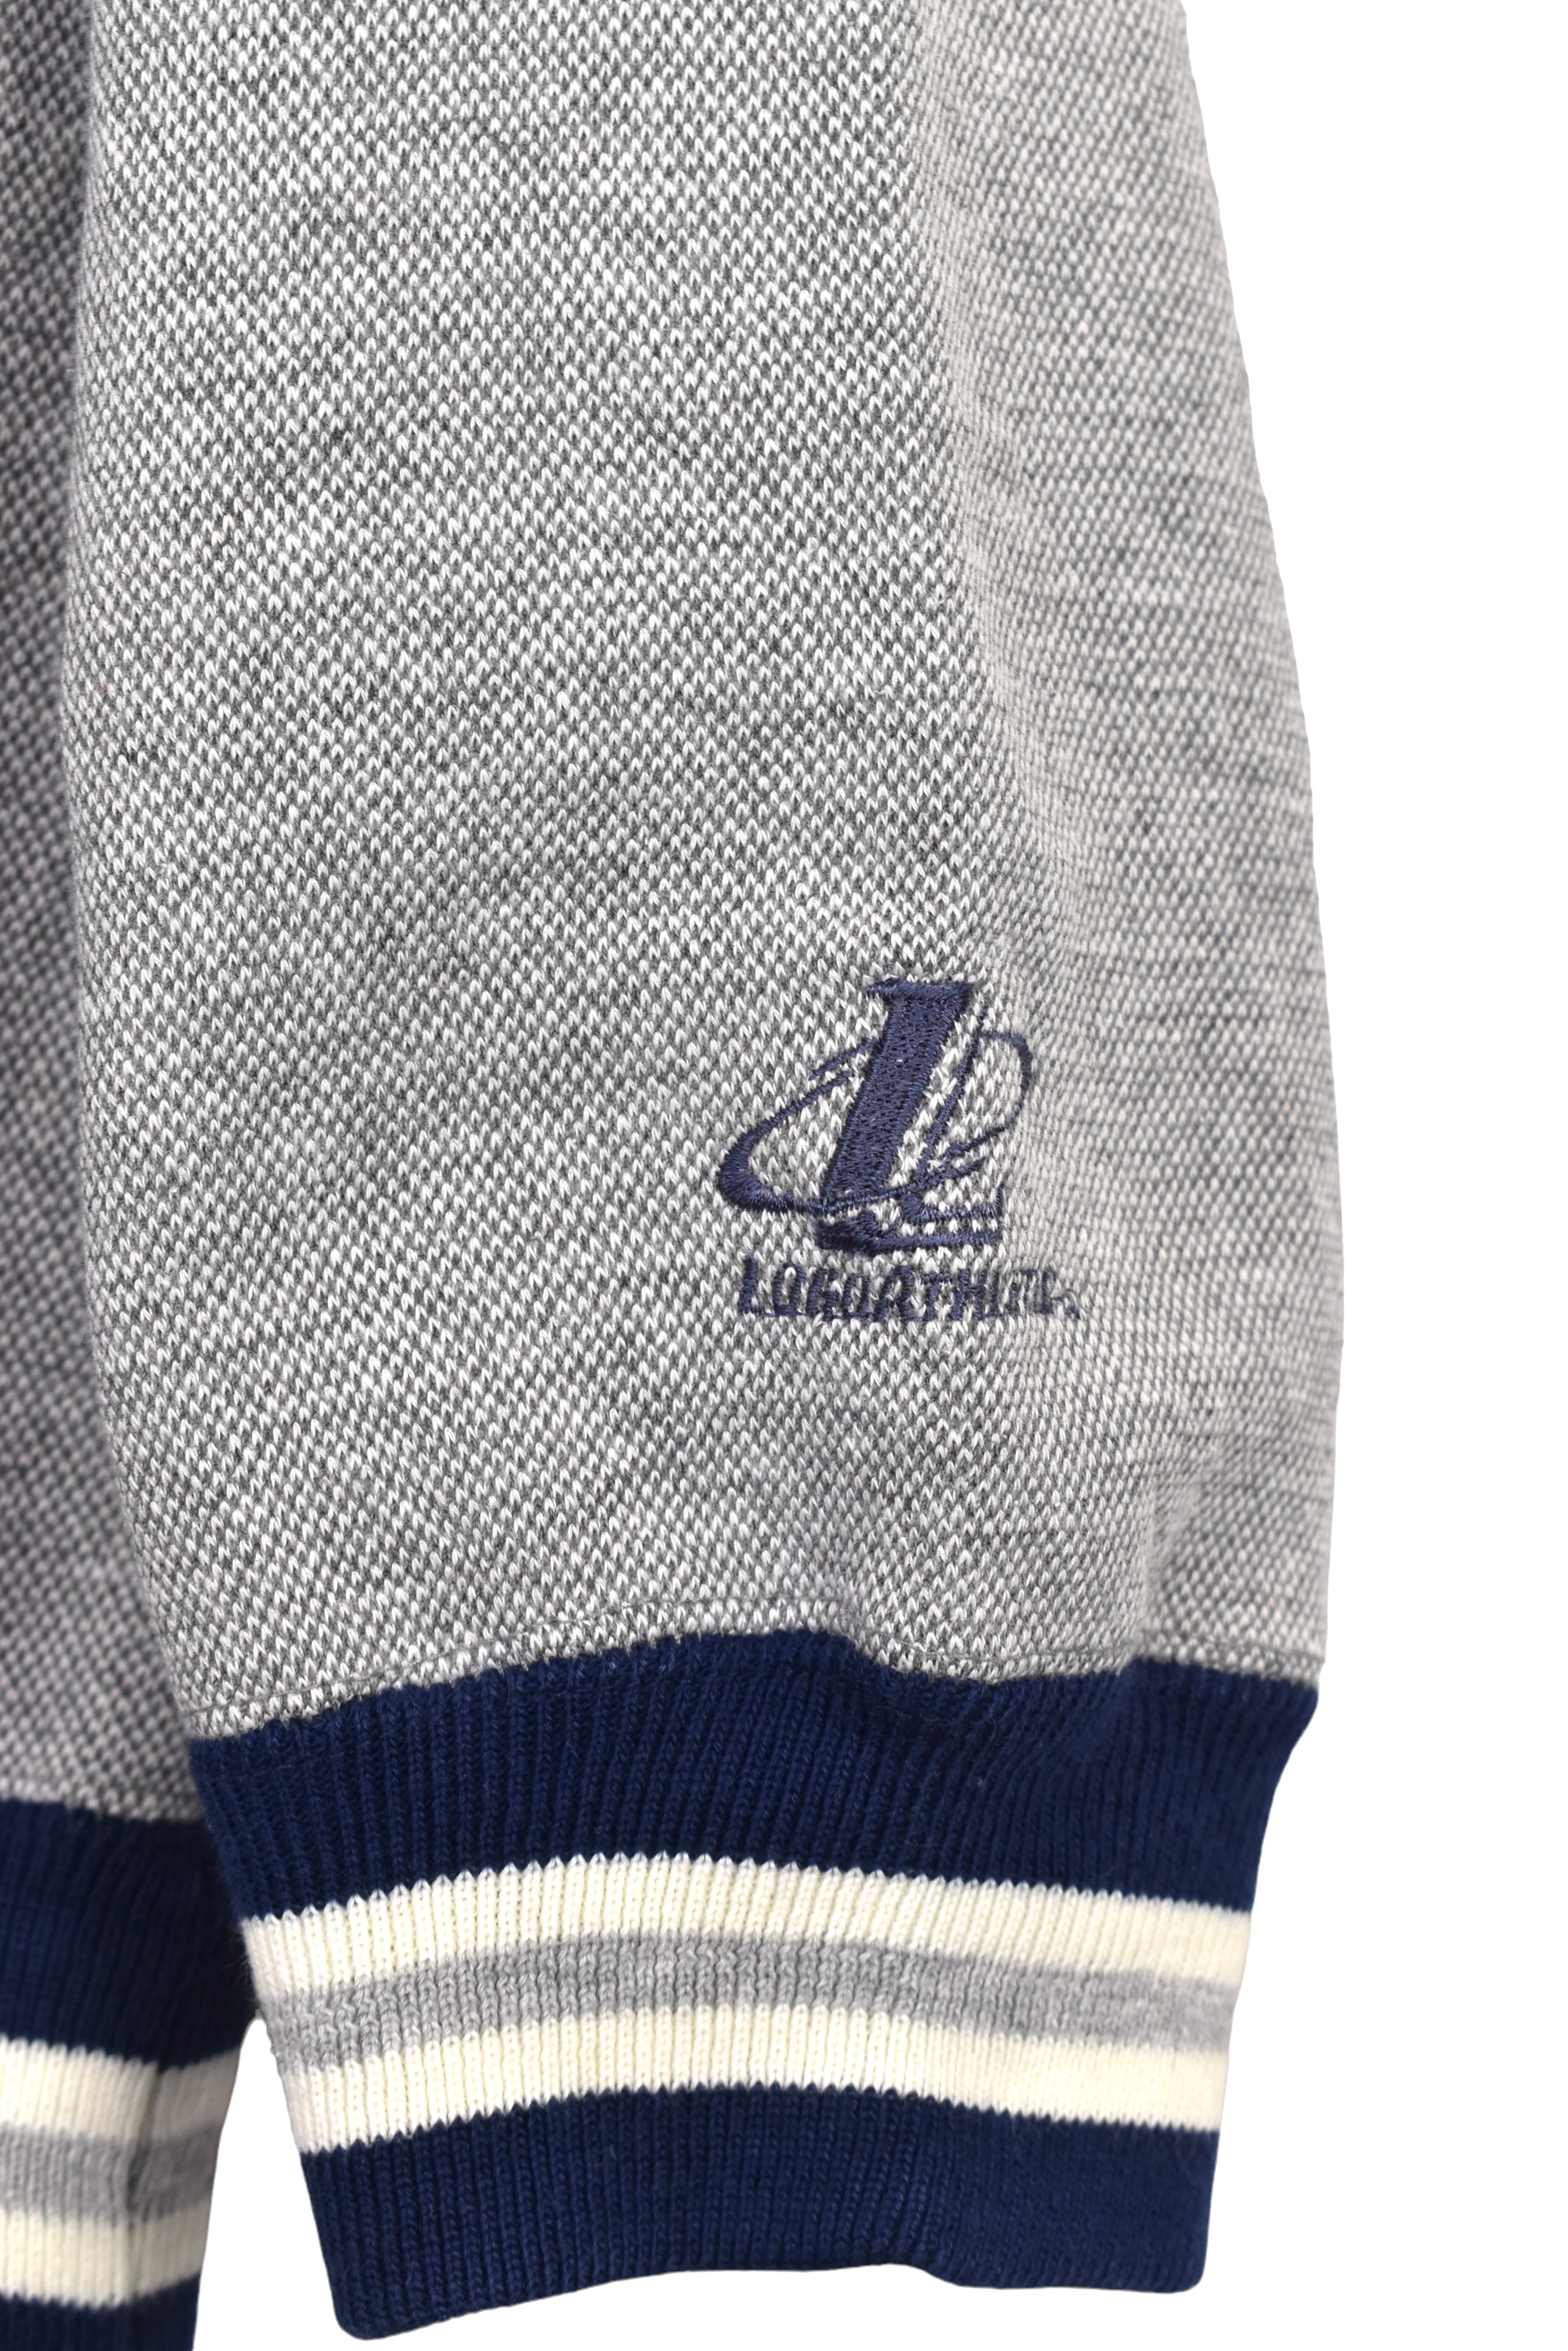 Vintage LA Chargers sweatshirt (XL), grey NFL embroidered crewneck